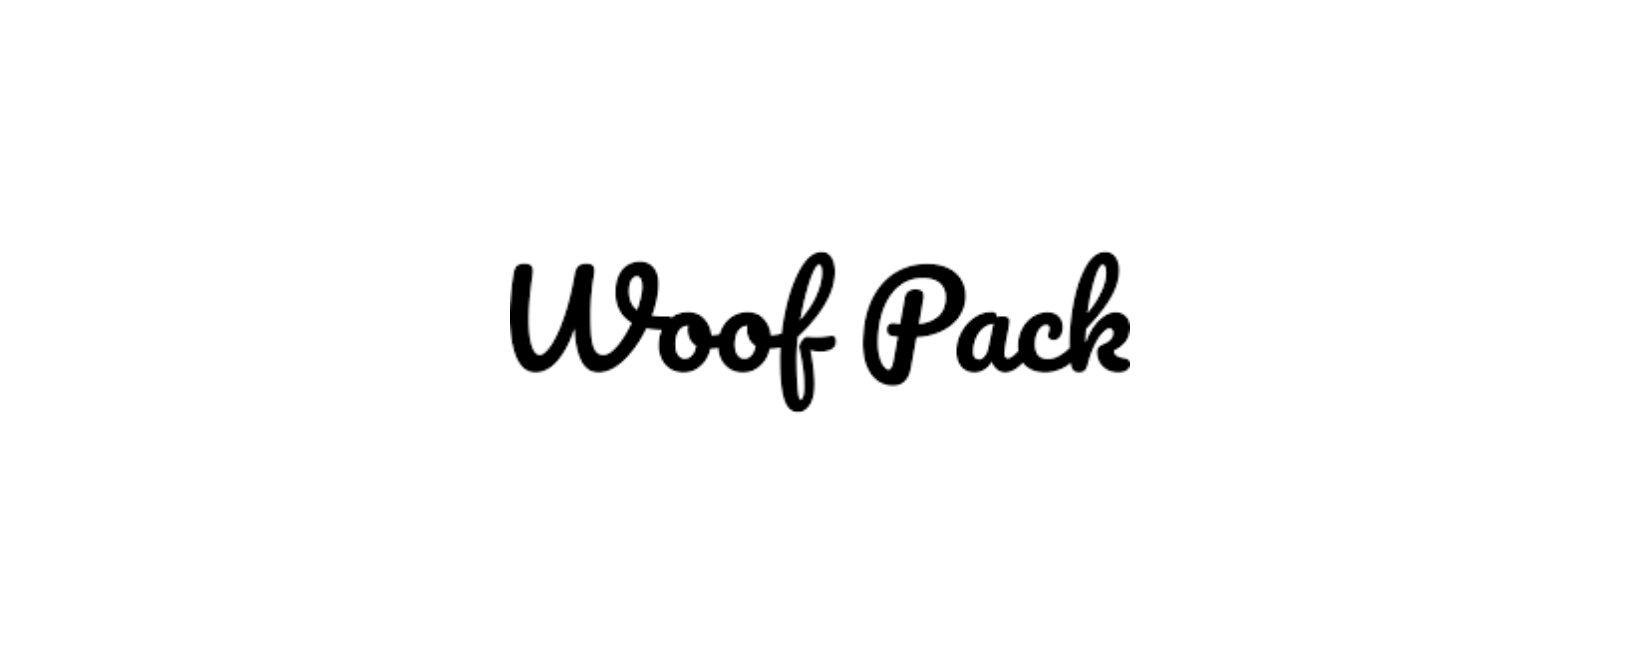 Woof Pack Discount Code 2022